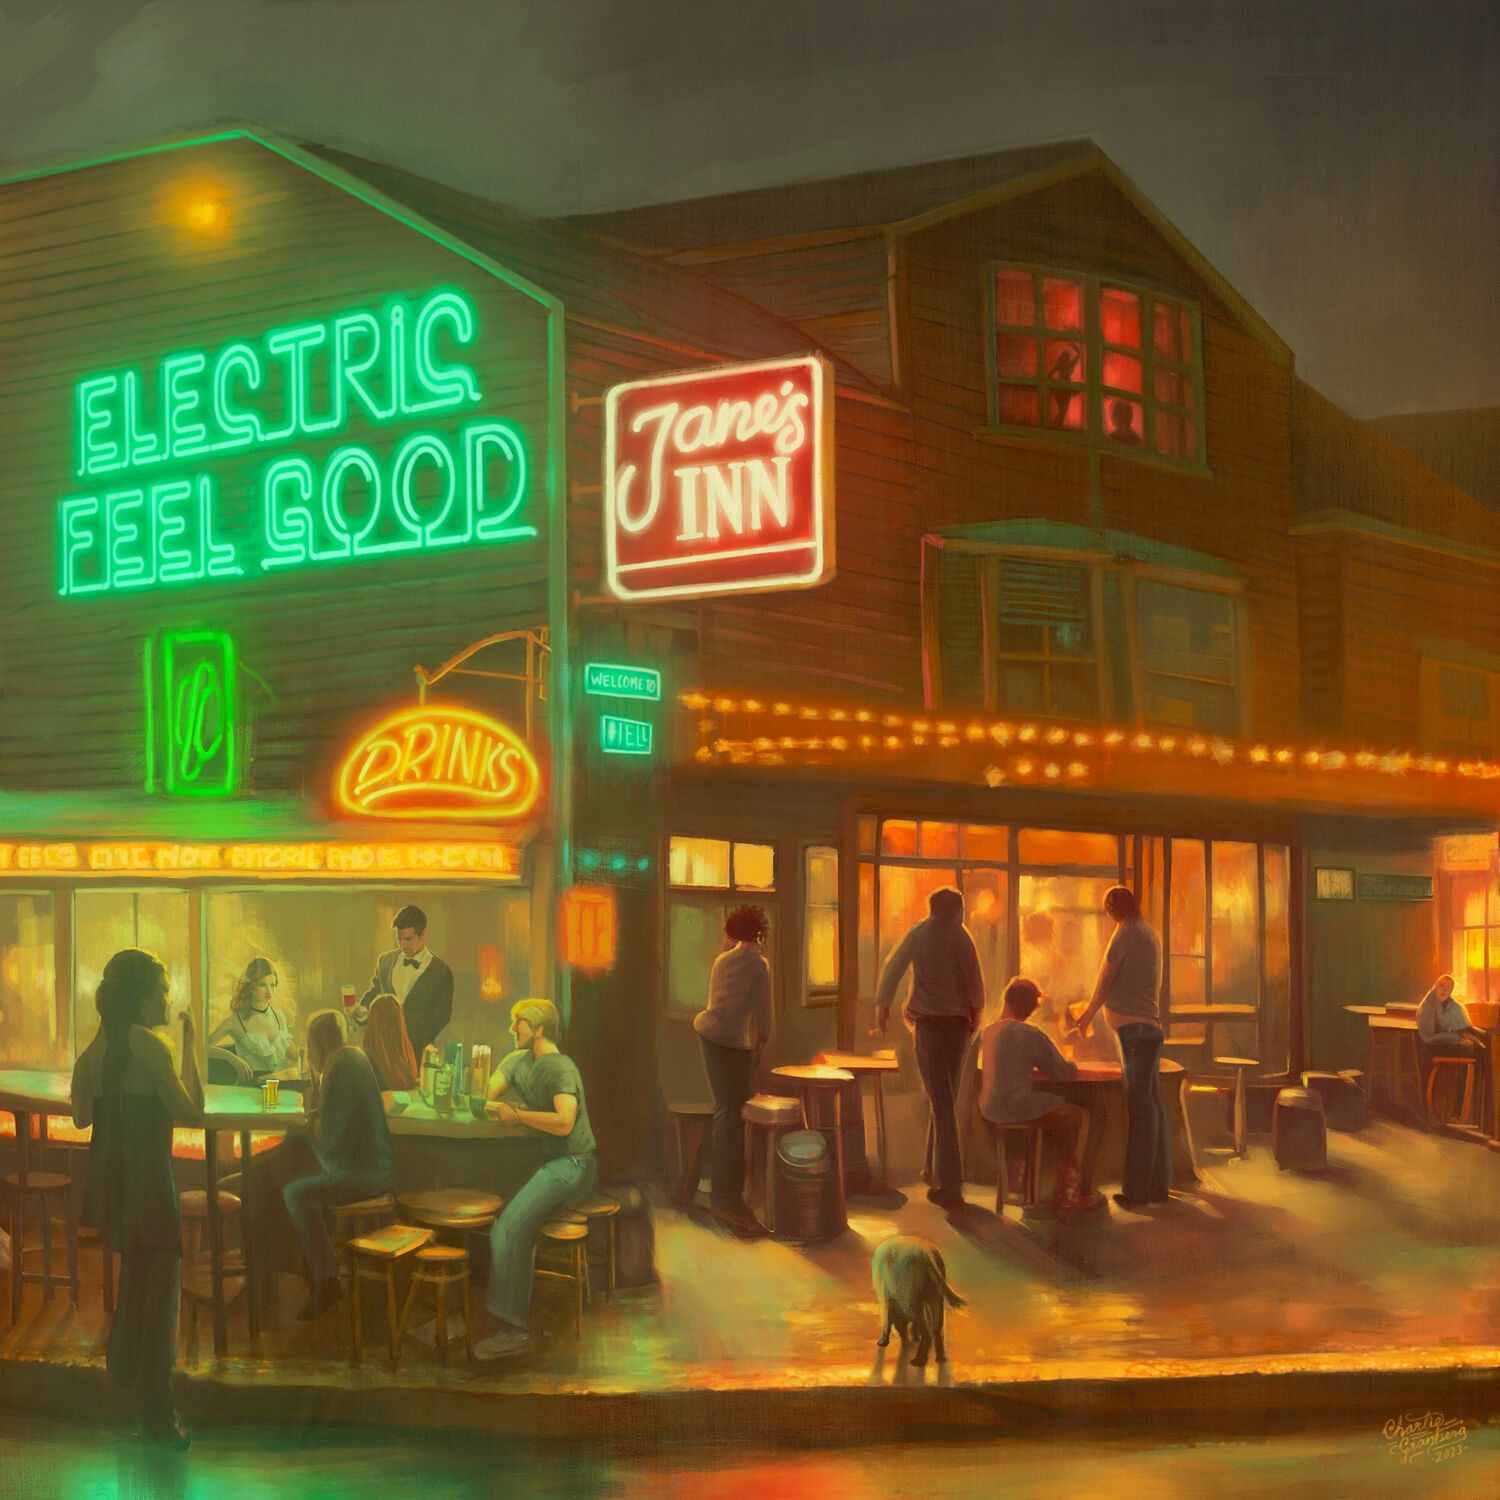 Electric Feel Good - Jane’s Inn